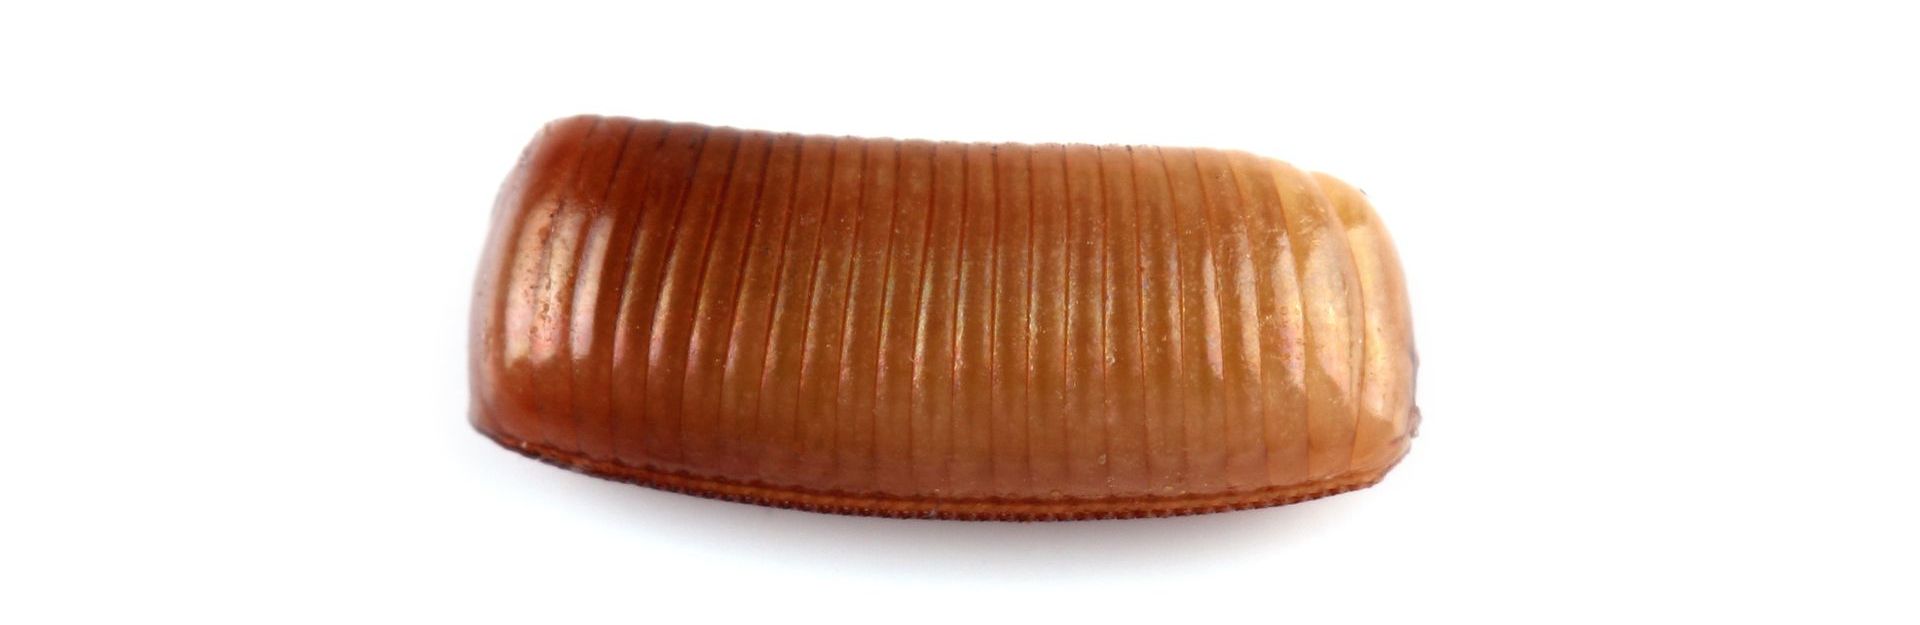 image of german cockroach egg